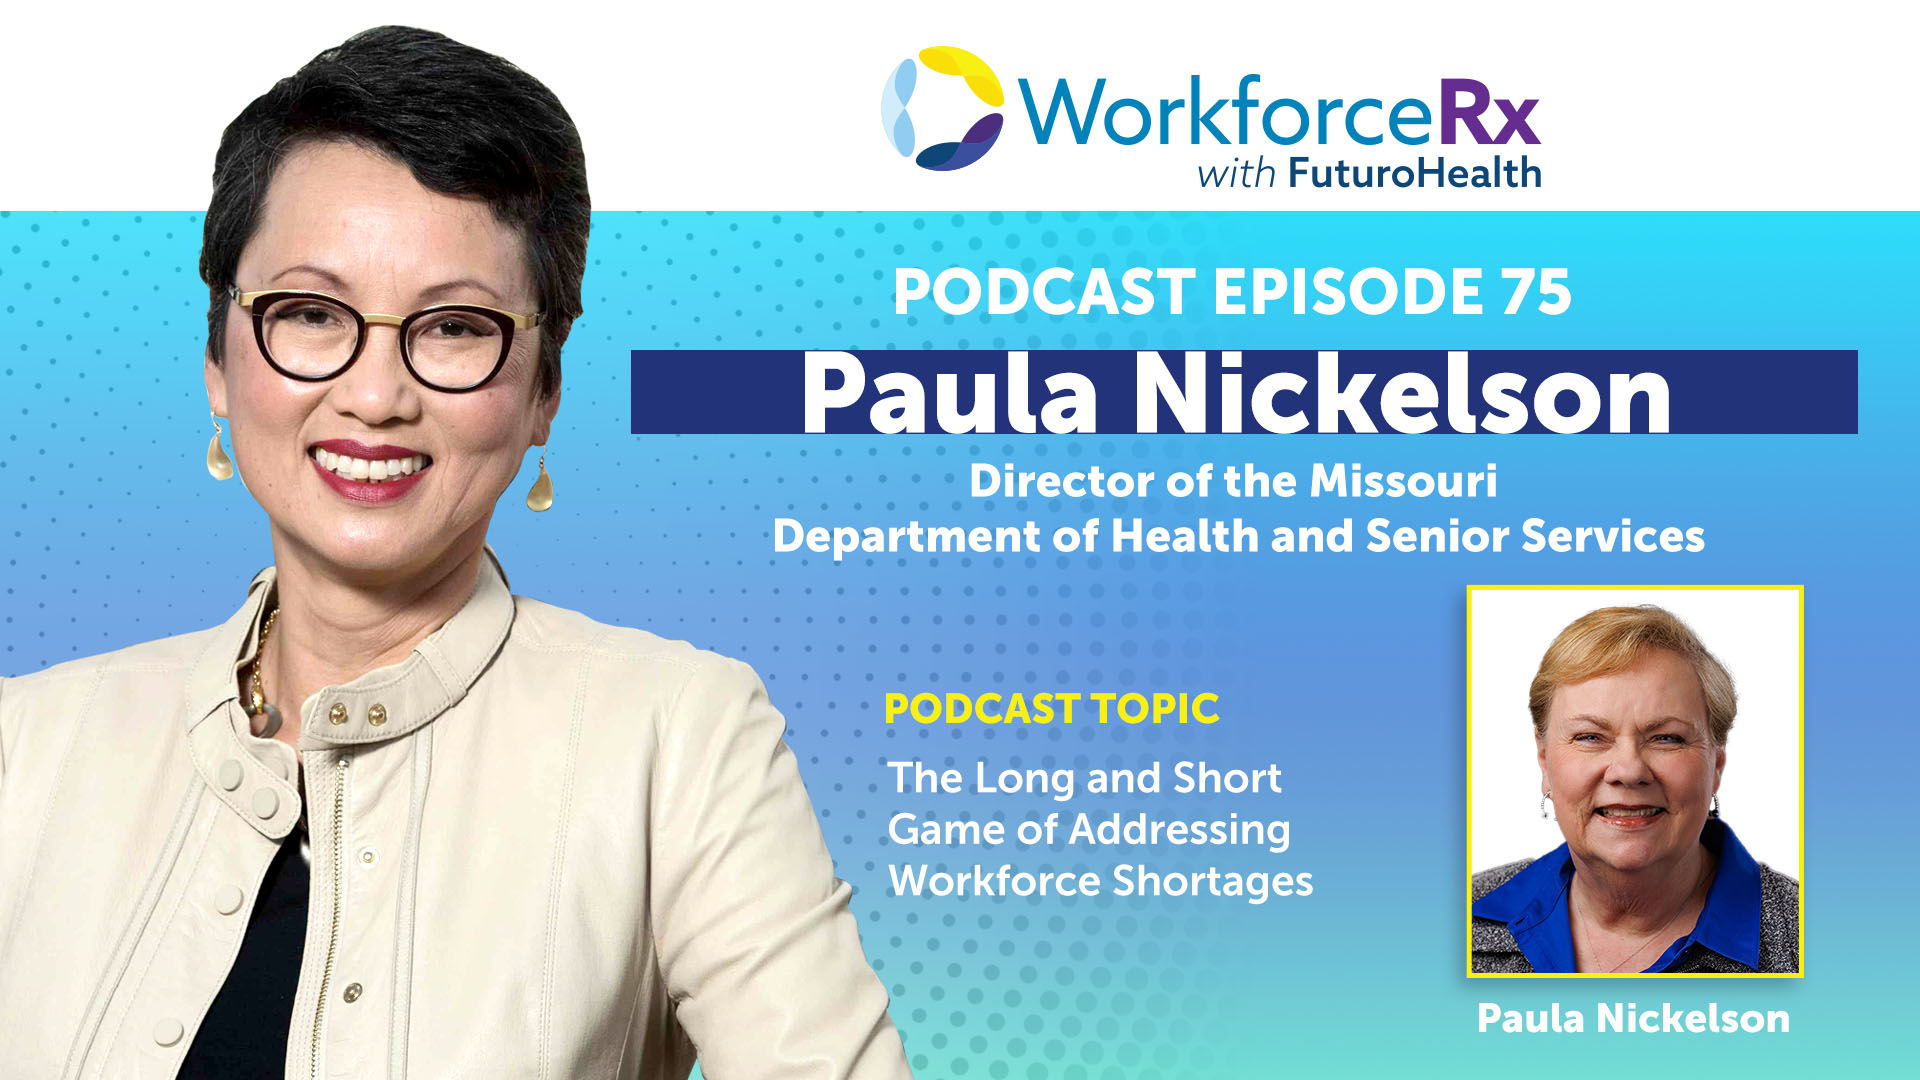 EP75 WorkforceRx Podcast Paula Nickelson